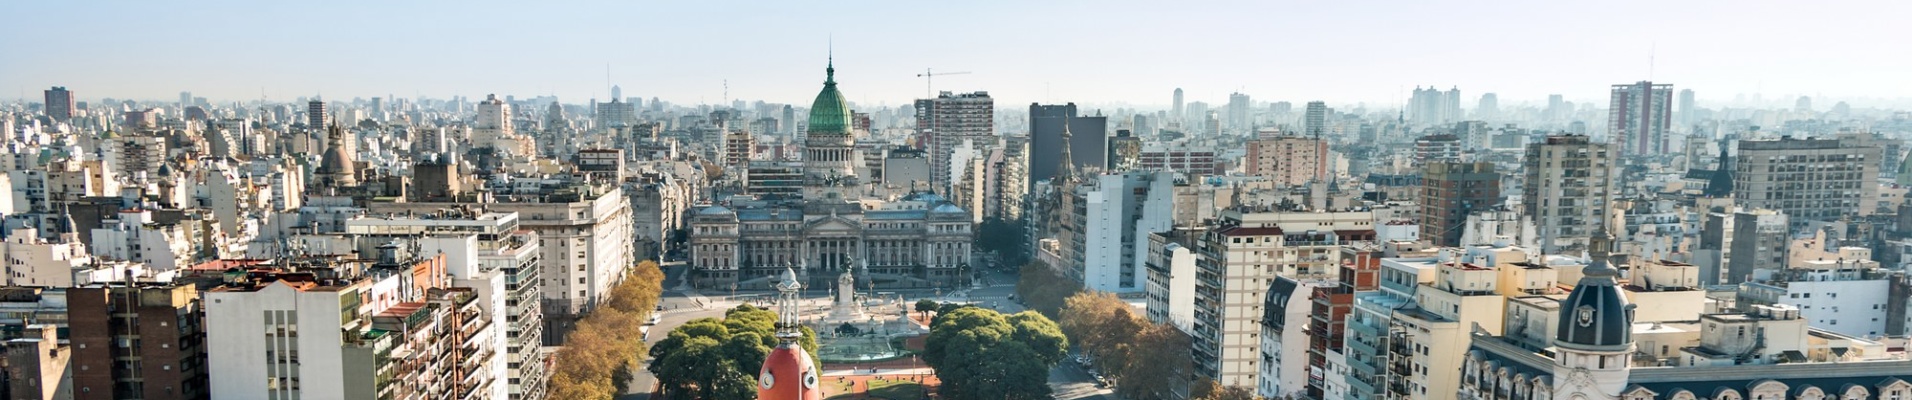 Congrès de la nation, Buenos Aires